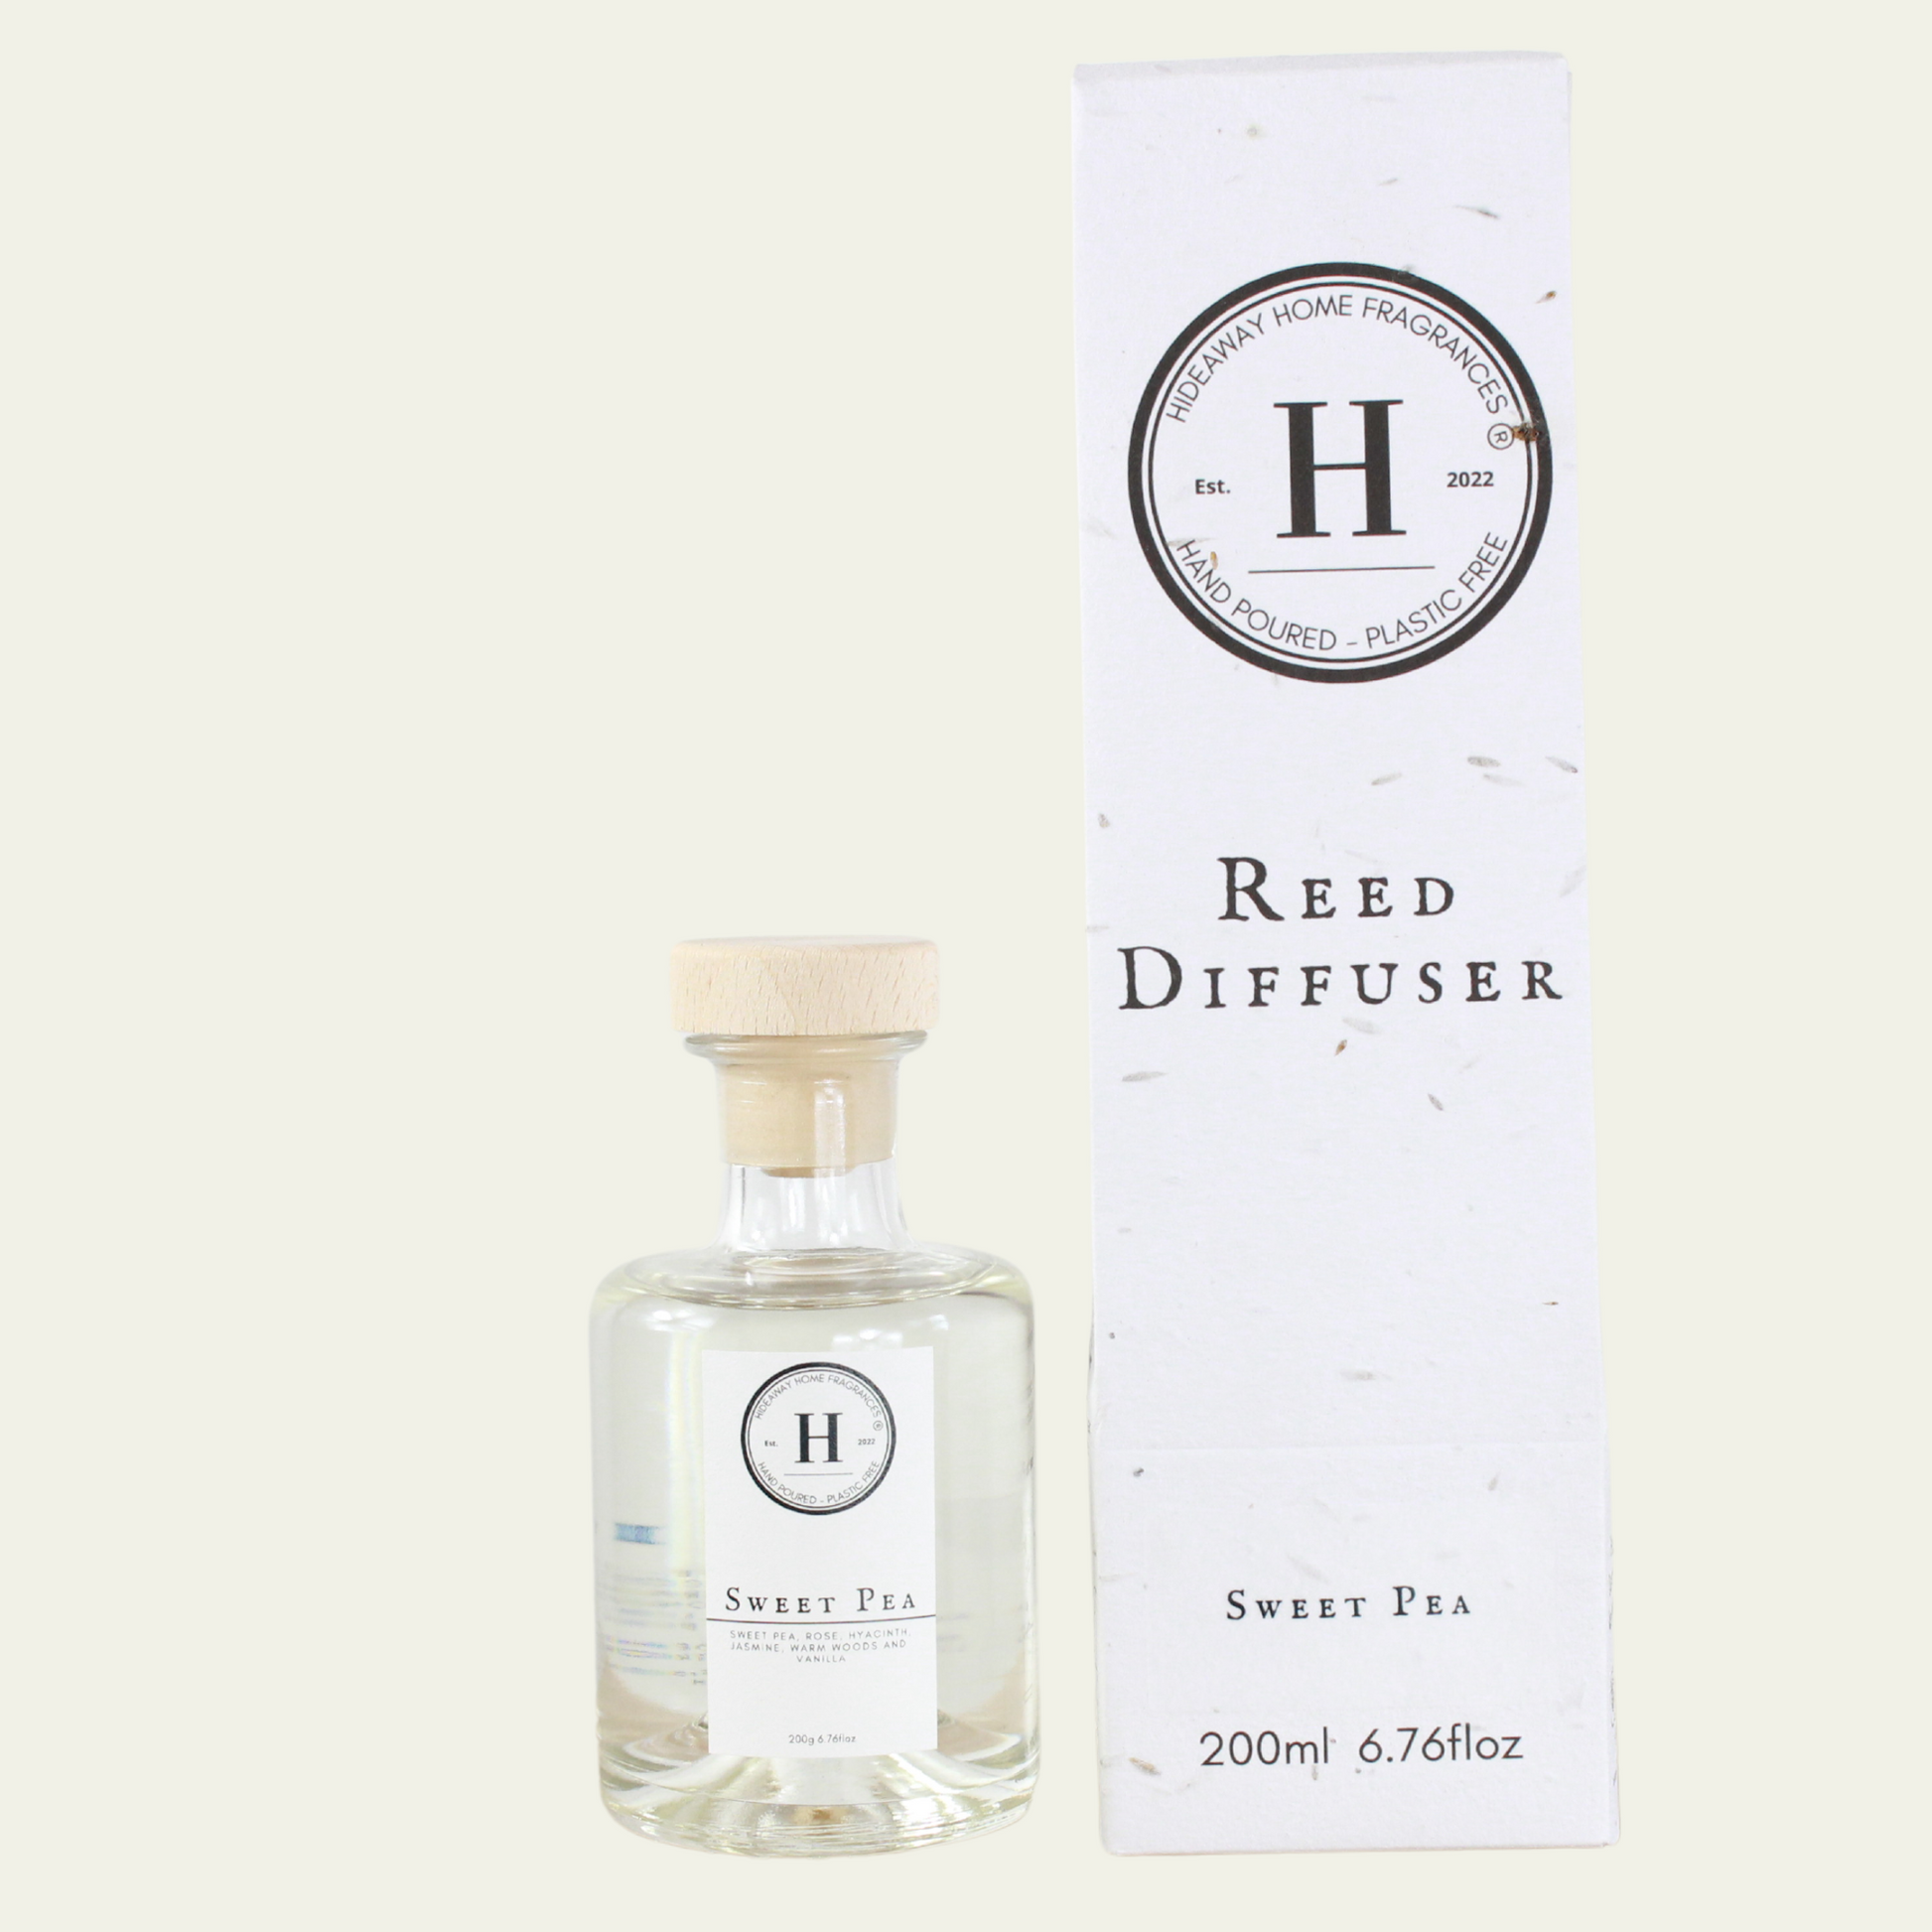 200ml Sweet Pea Reed Diffuser - Hideaway Home Fragrances